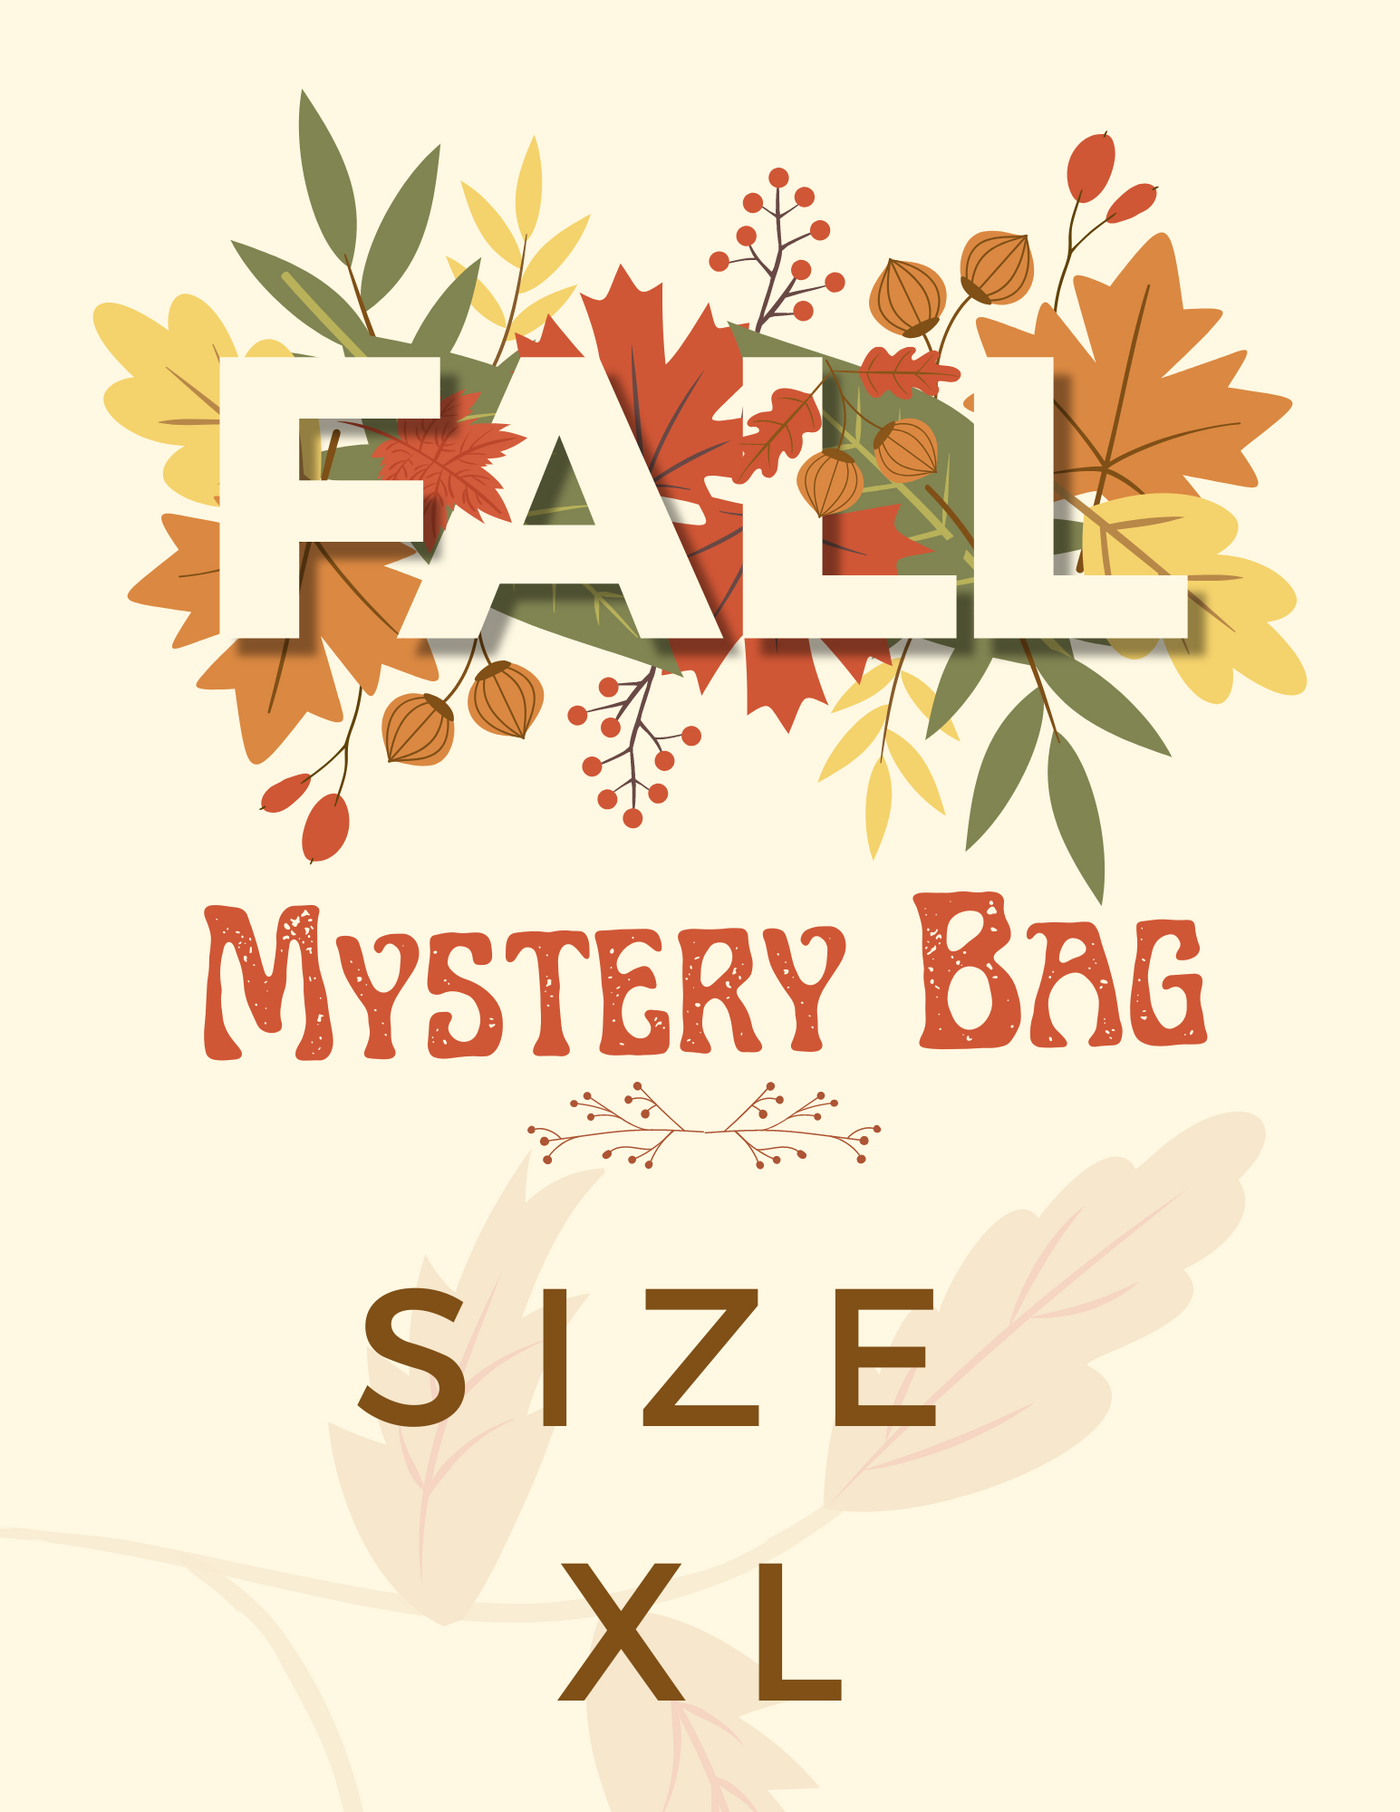 XL - Mystery bag